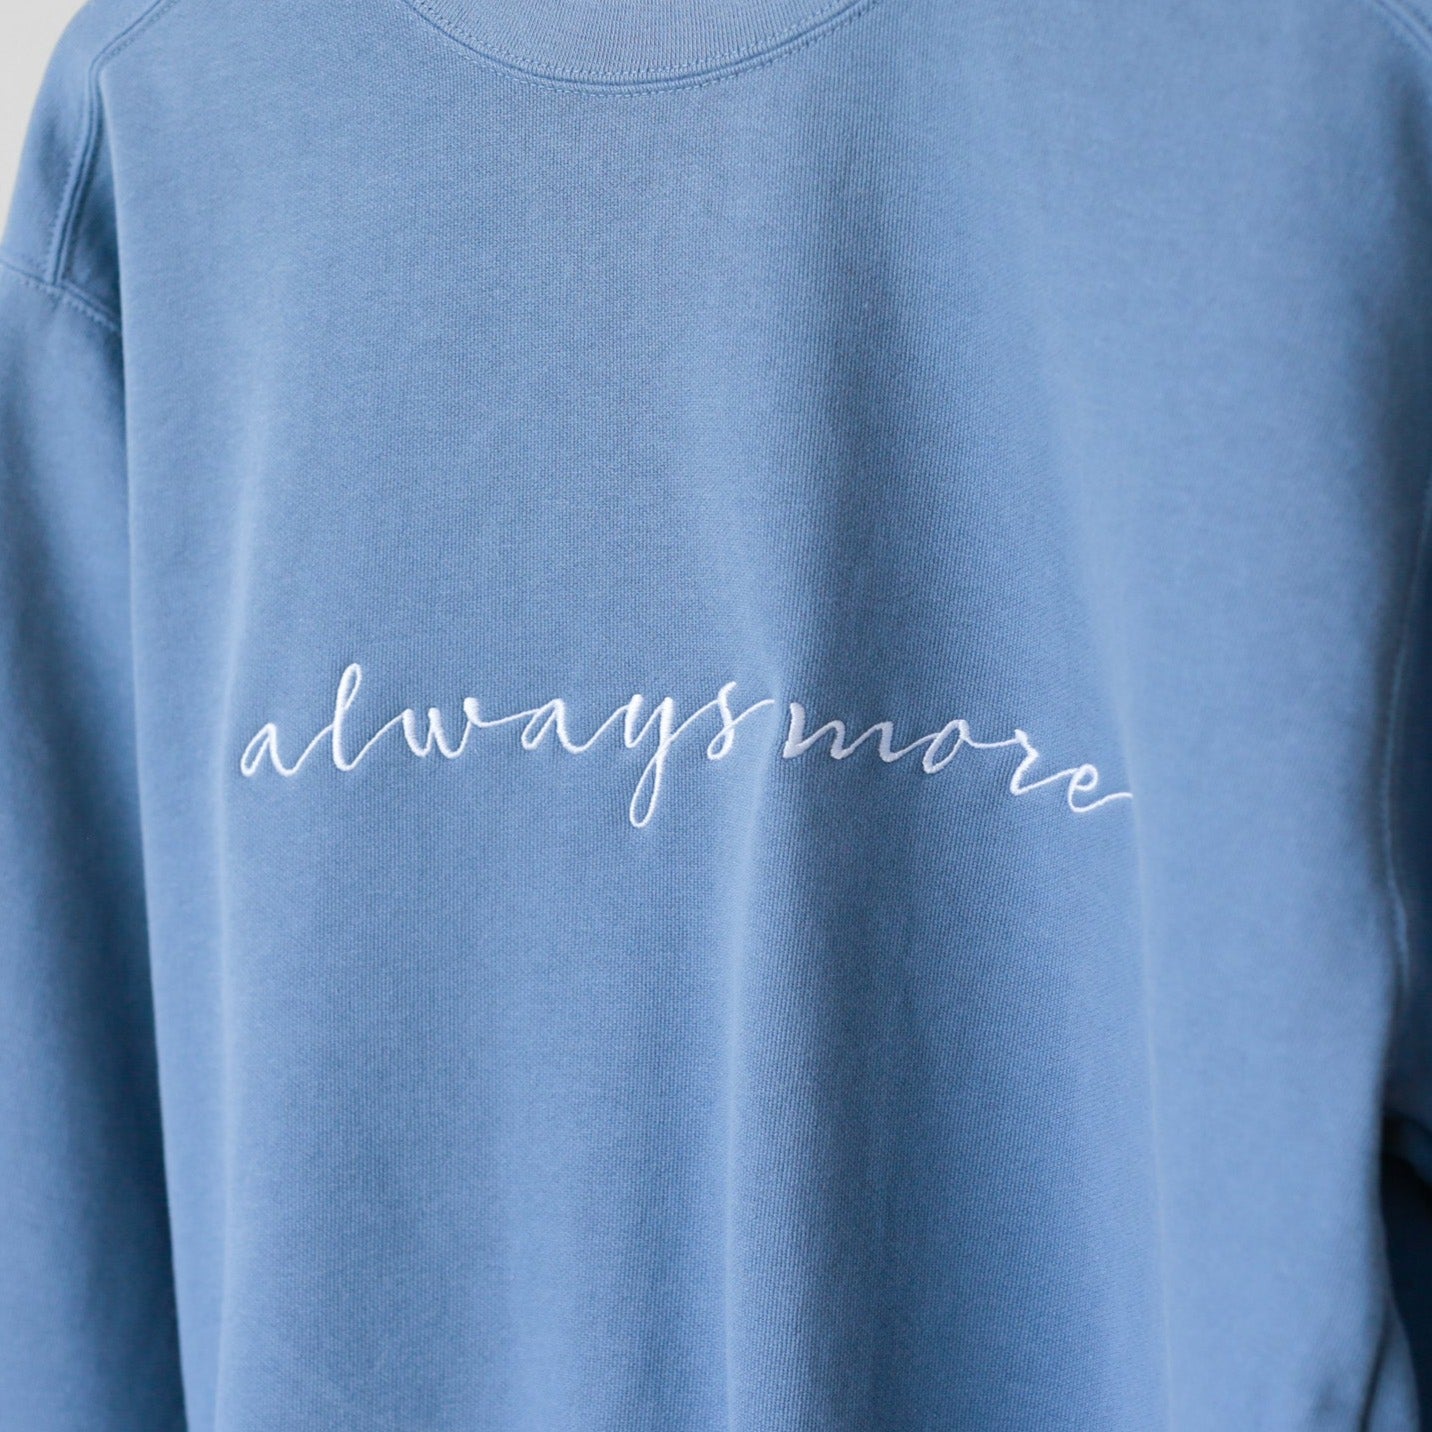 Always More Embroidered Sweatshirt - Blue